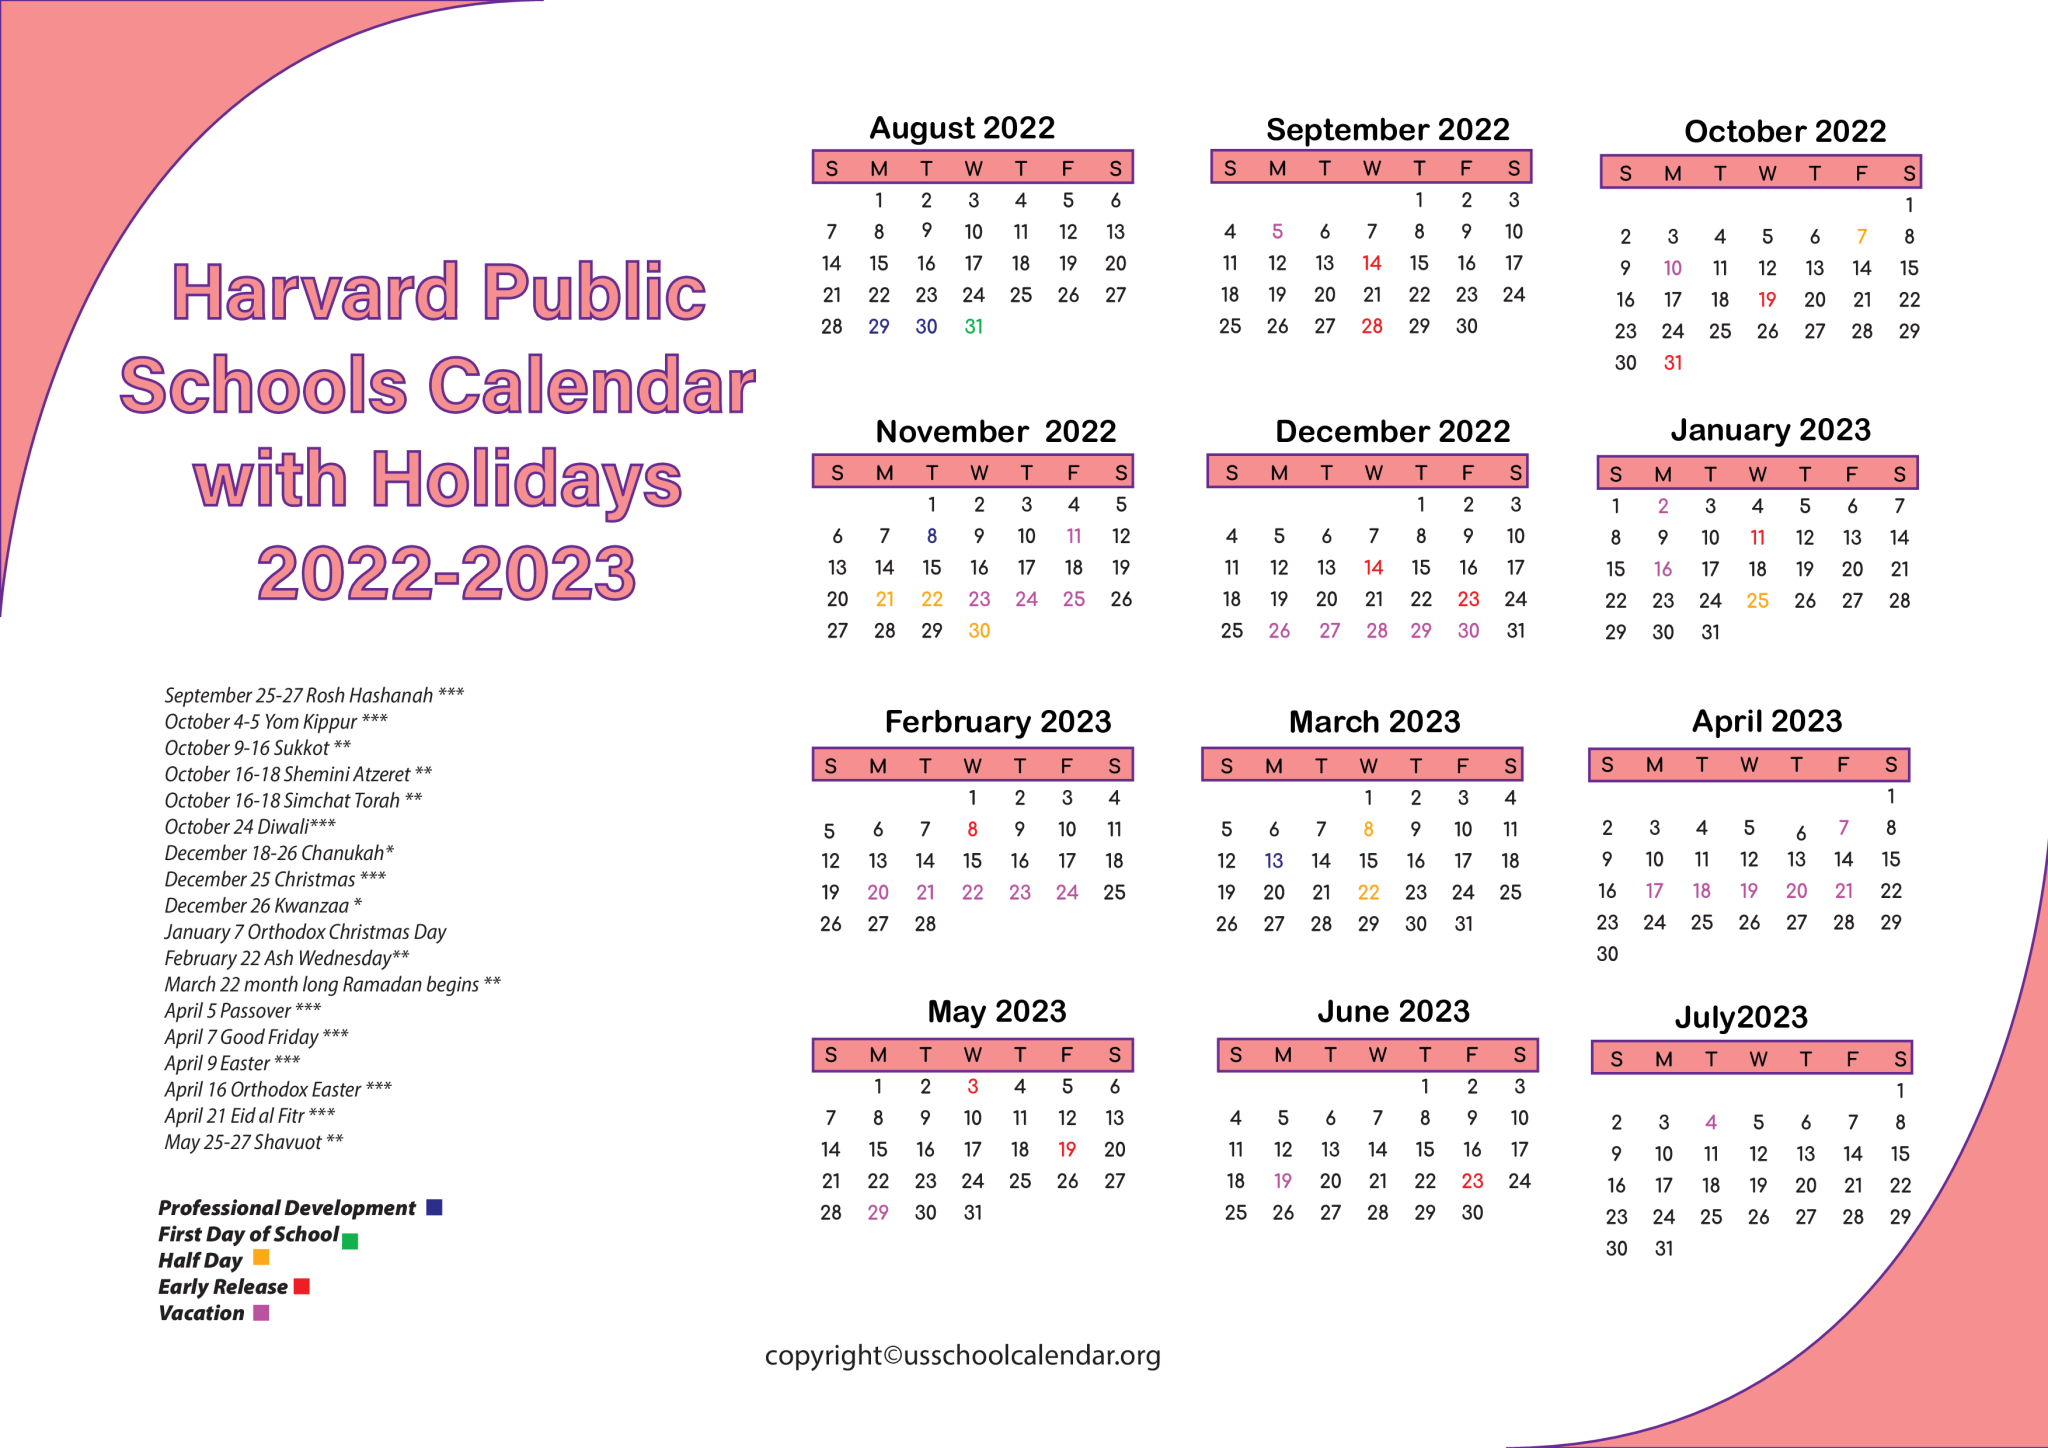 harvard-public-schools-calendar-with-holidays-2023